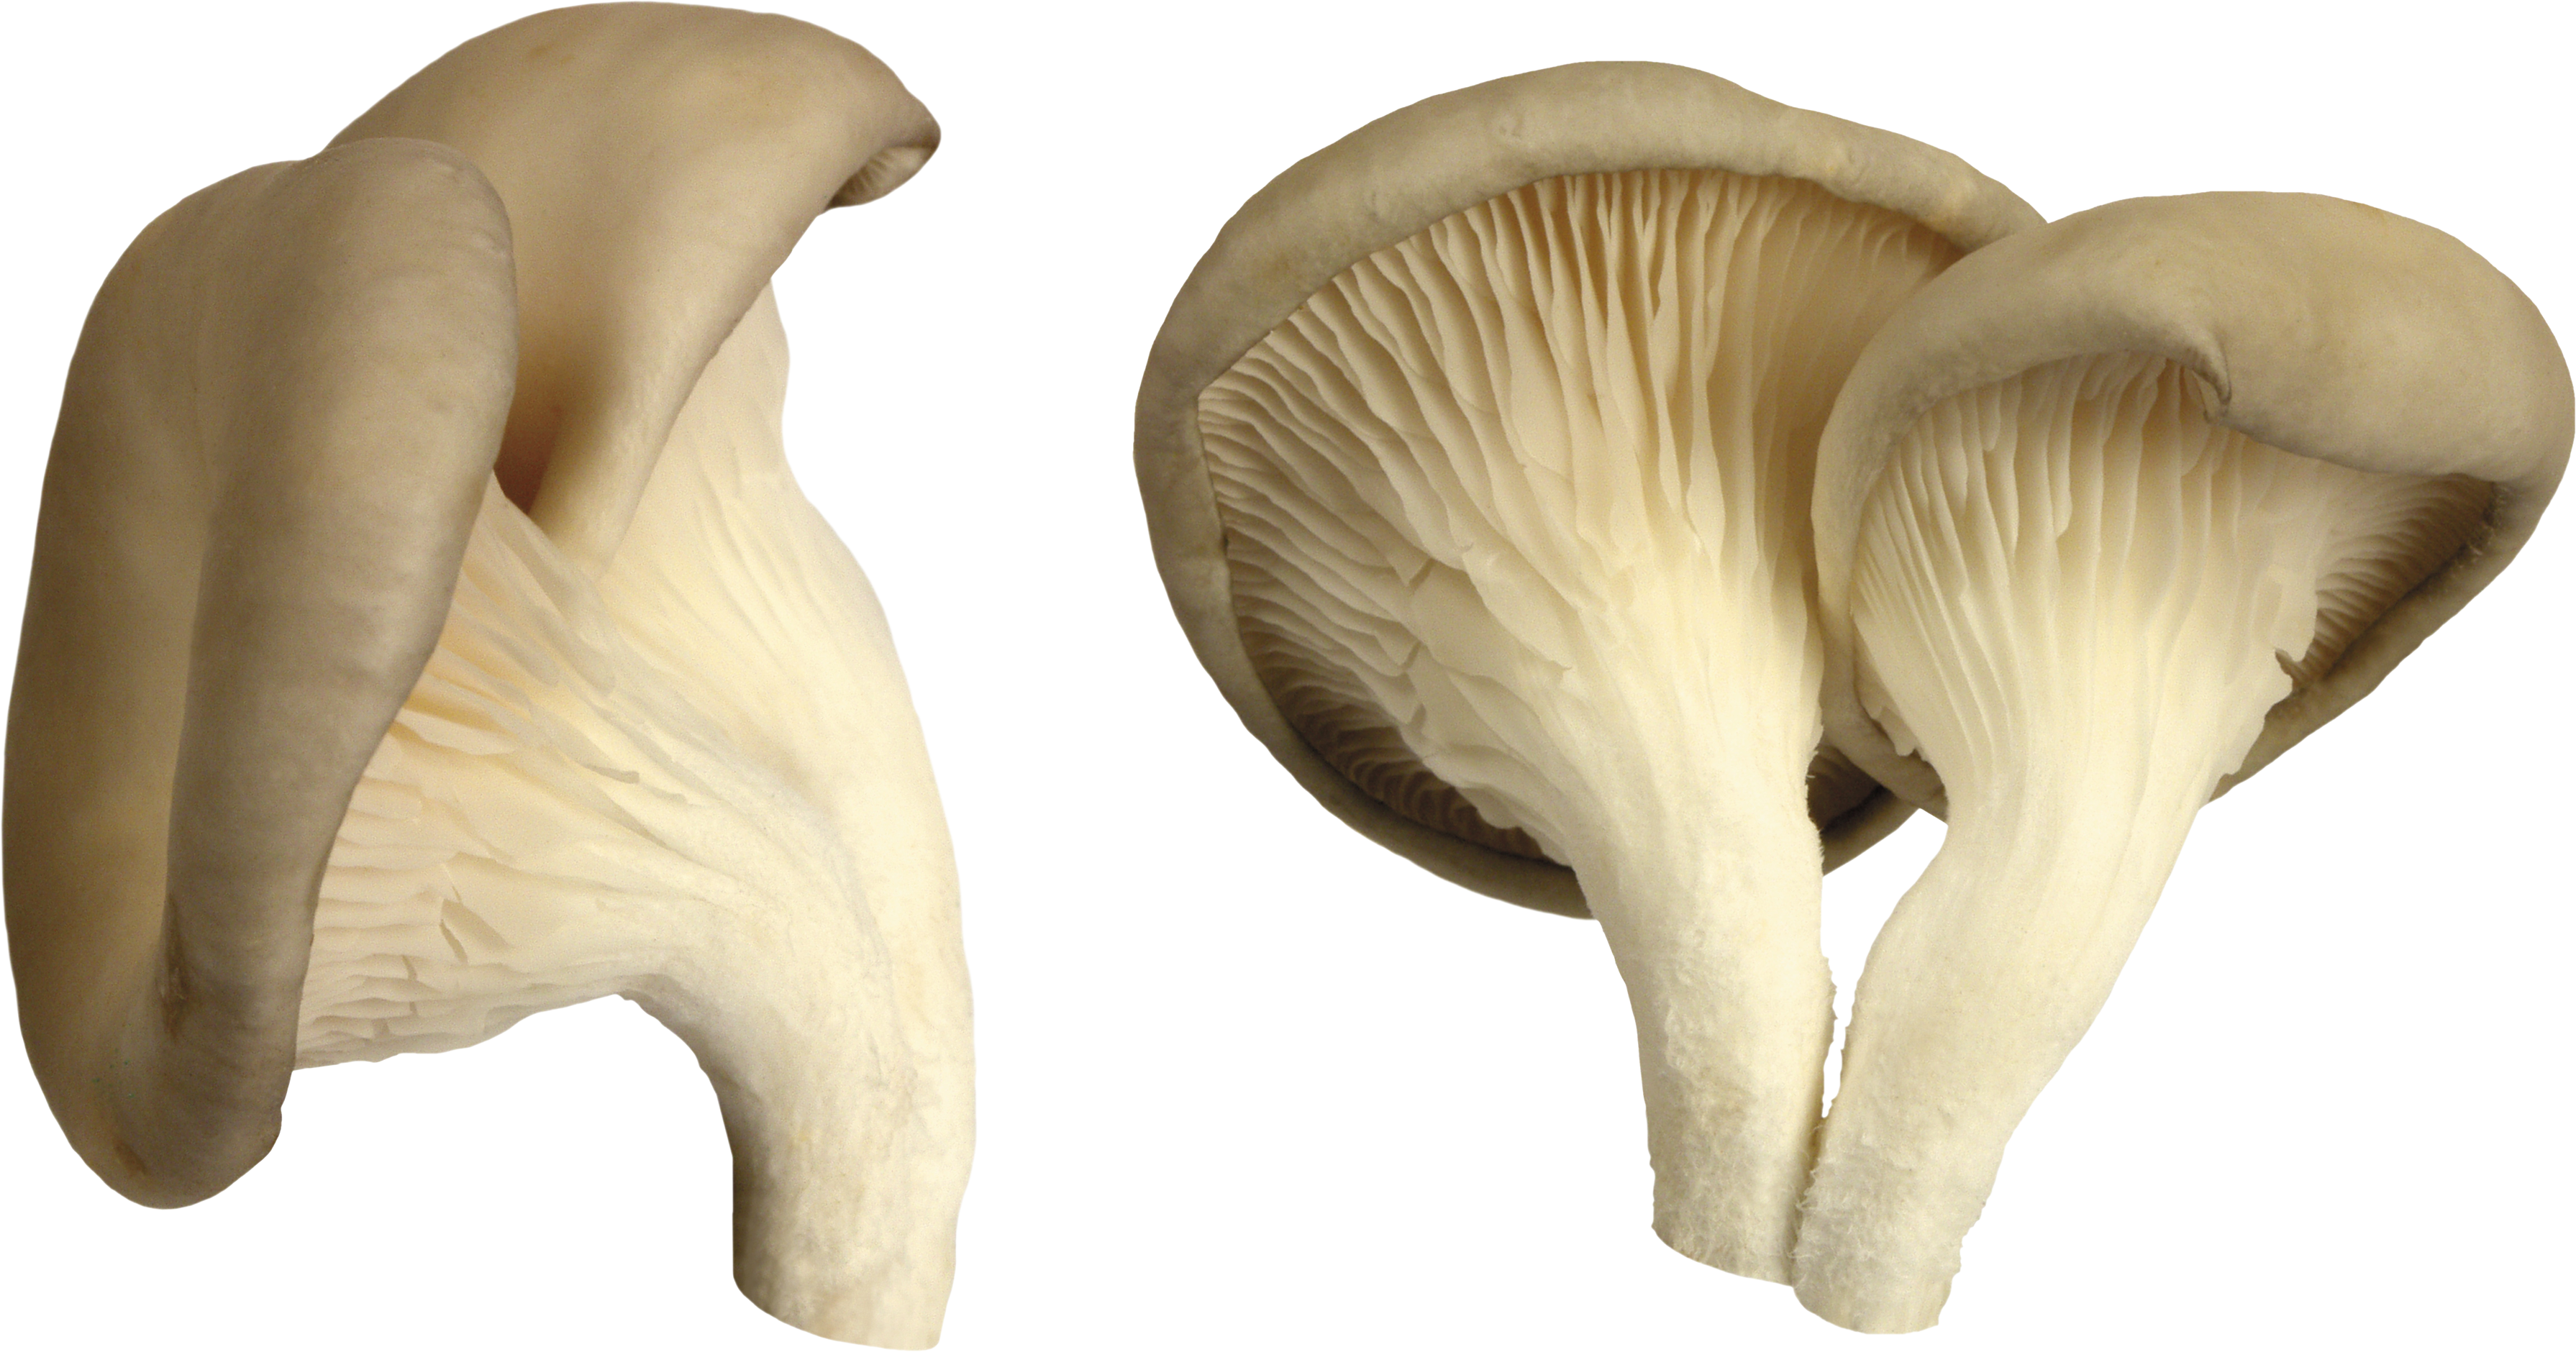 Mushroom PNG image